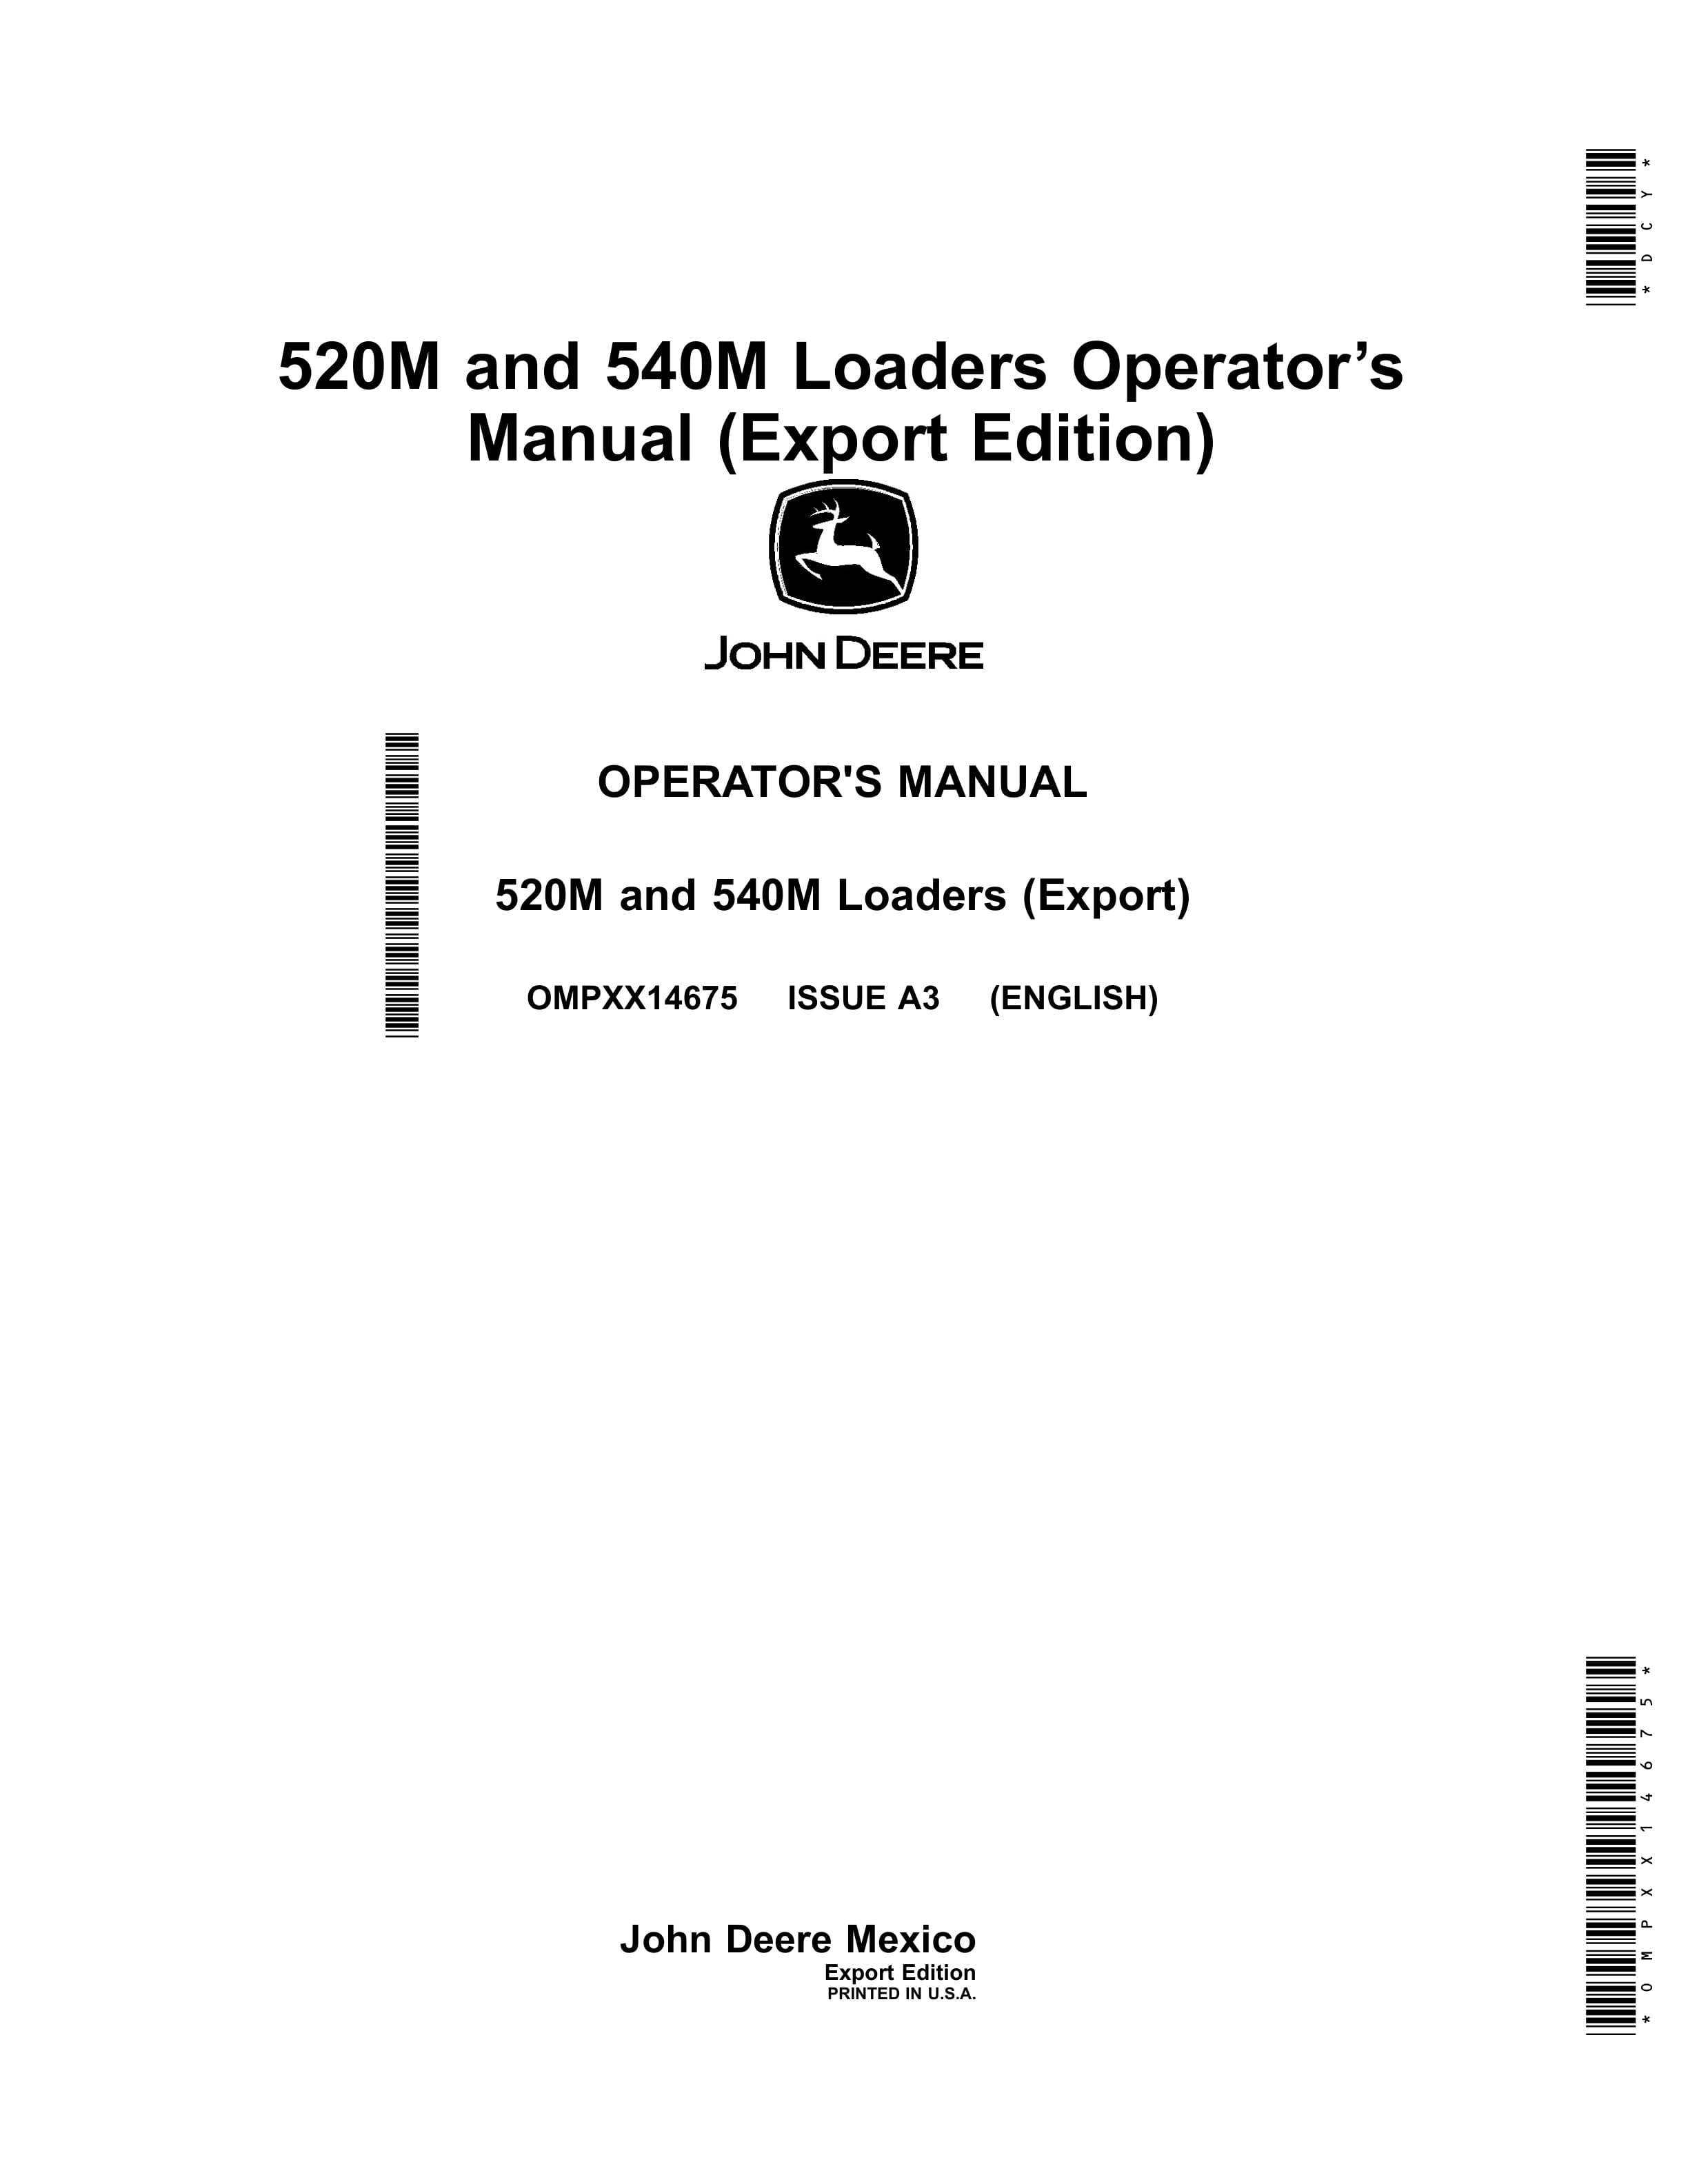 John Deere 520M and 540M Loader Operator Manual OMPXX14675 1